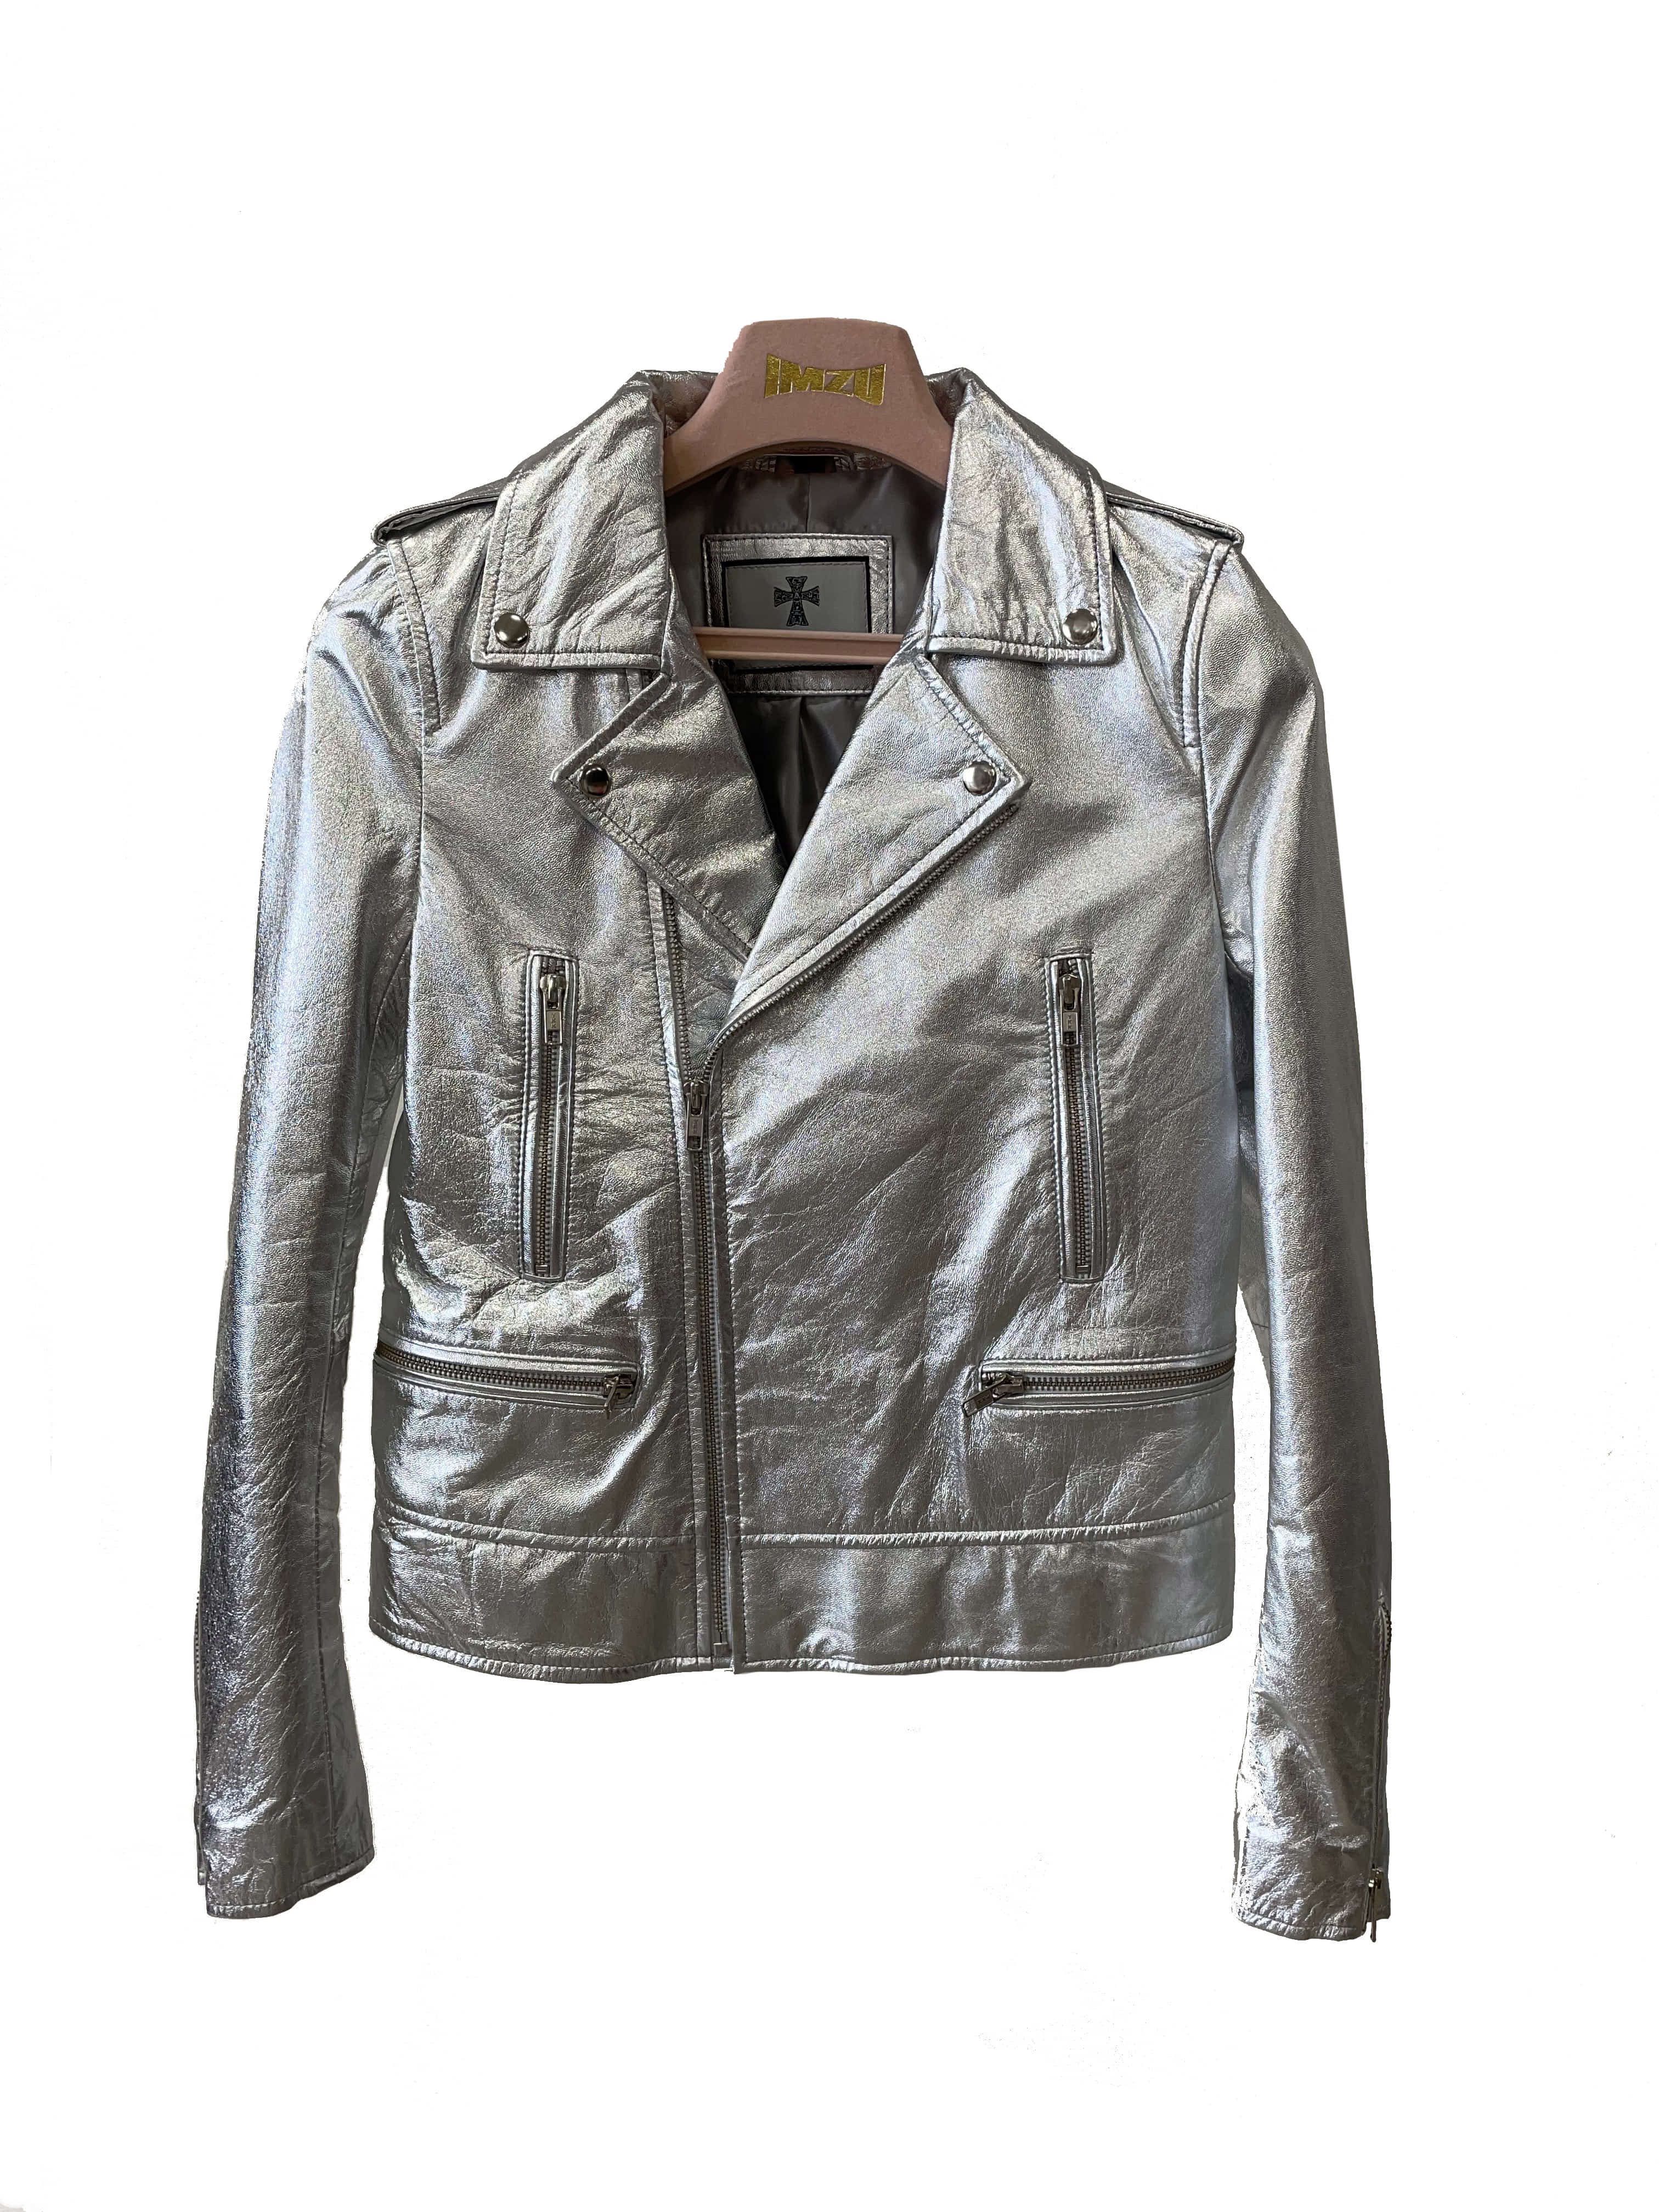 Metal leather jacket